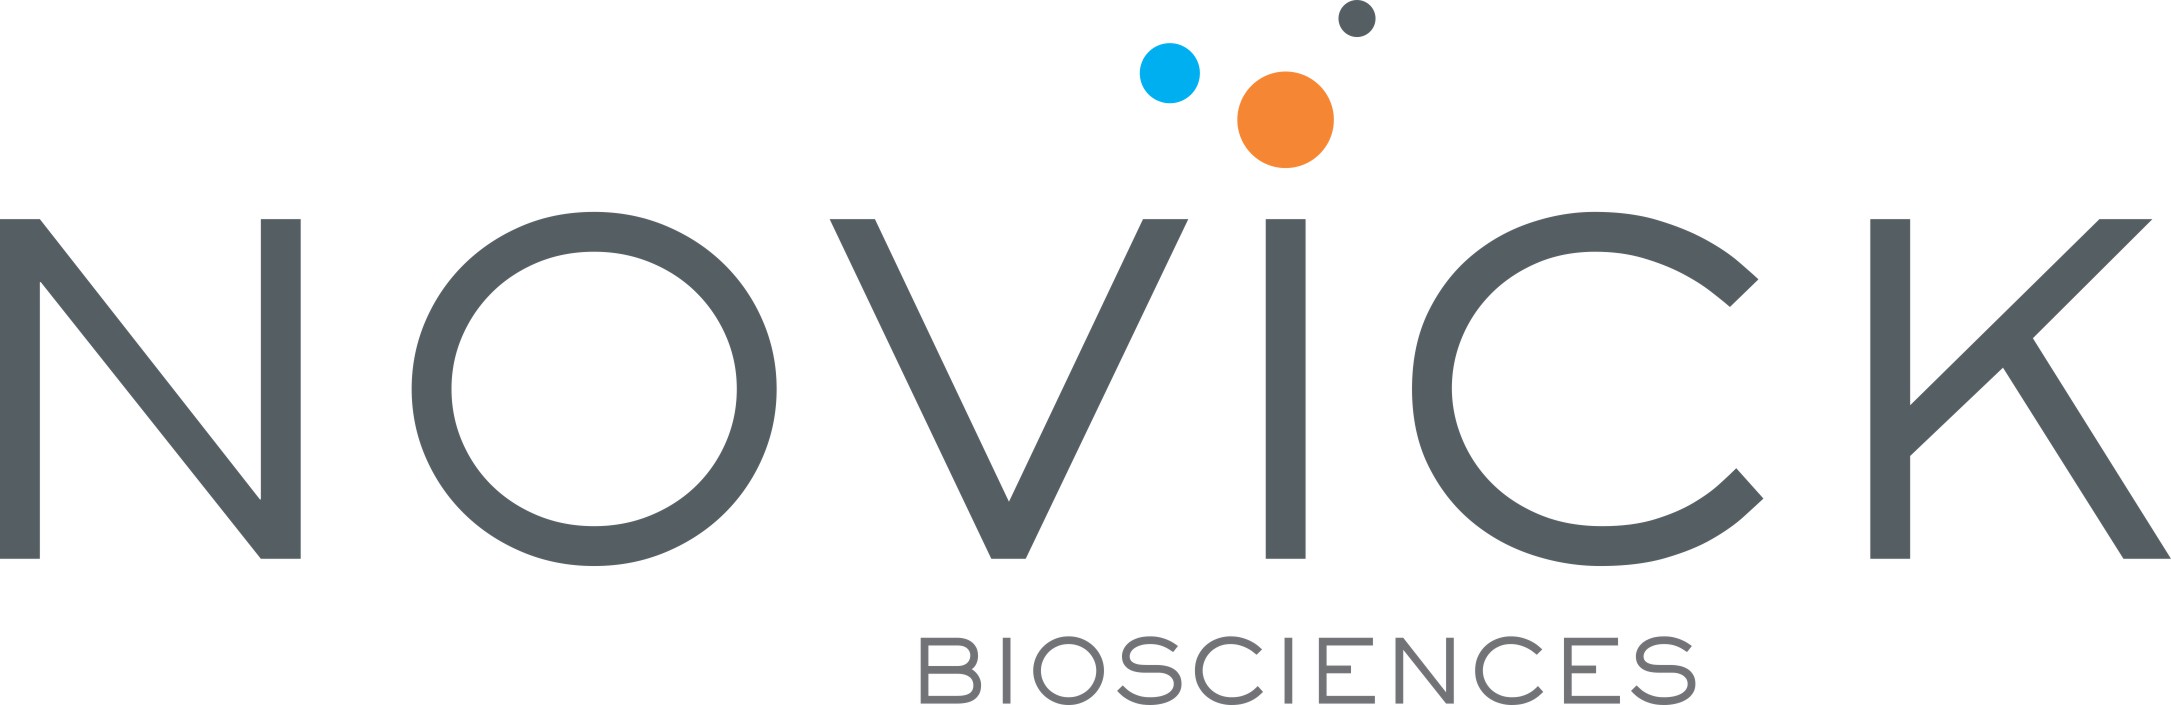 Novick Biosciences